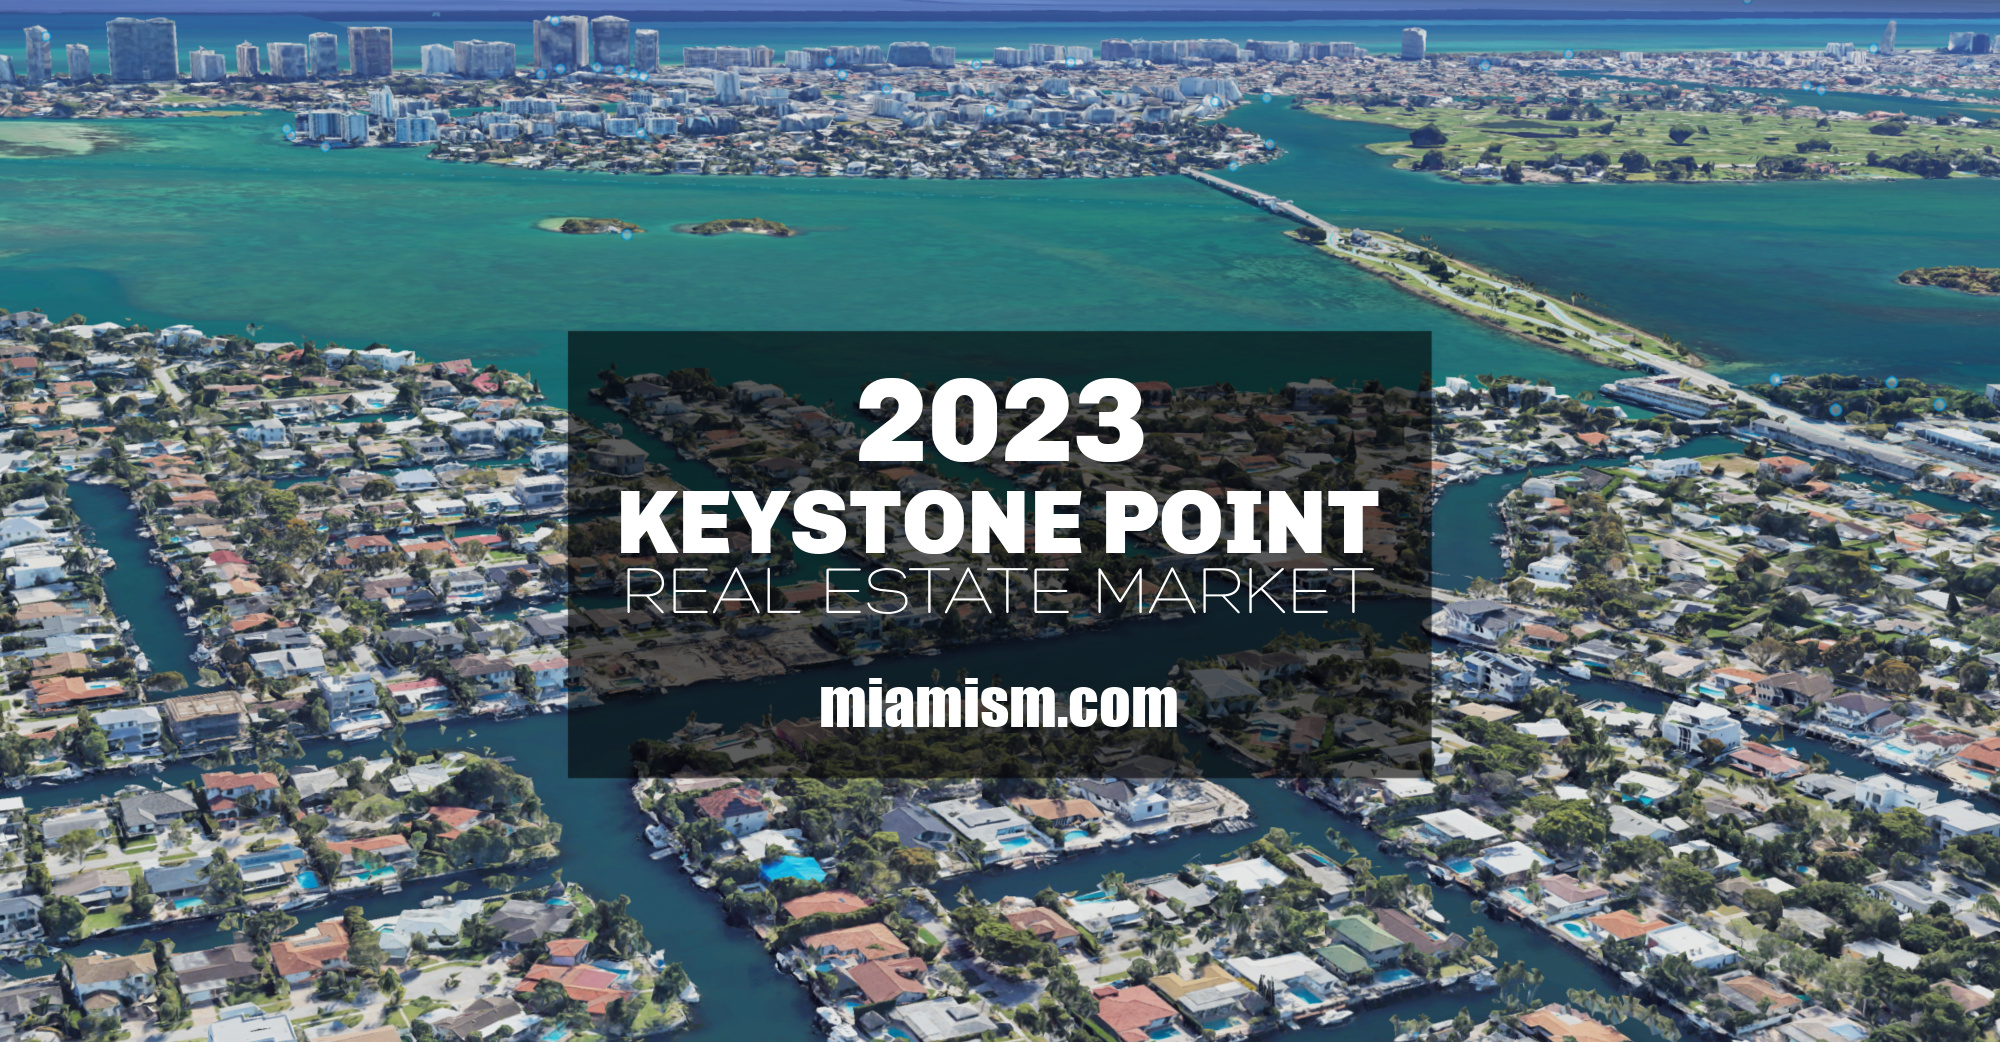 2023 Keystone Point Real Estate stats via miamism